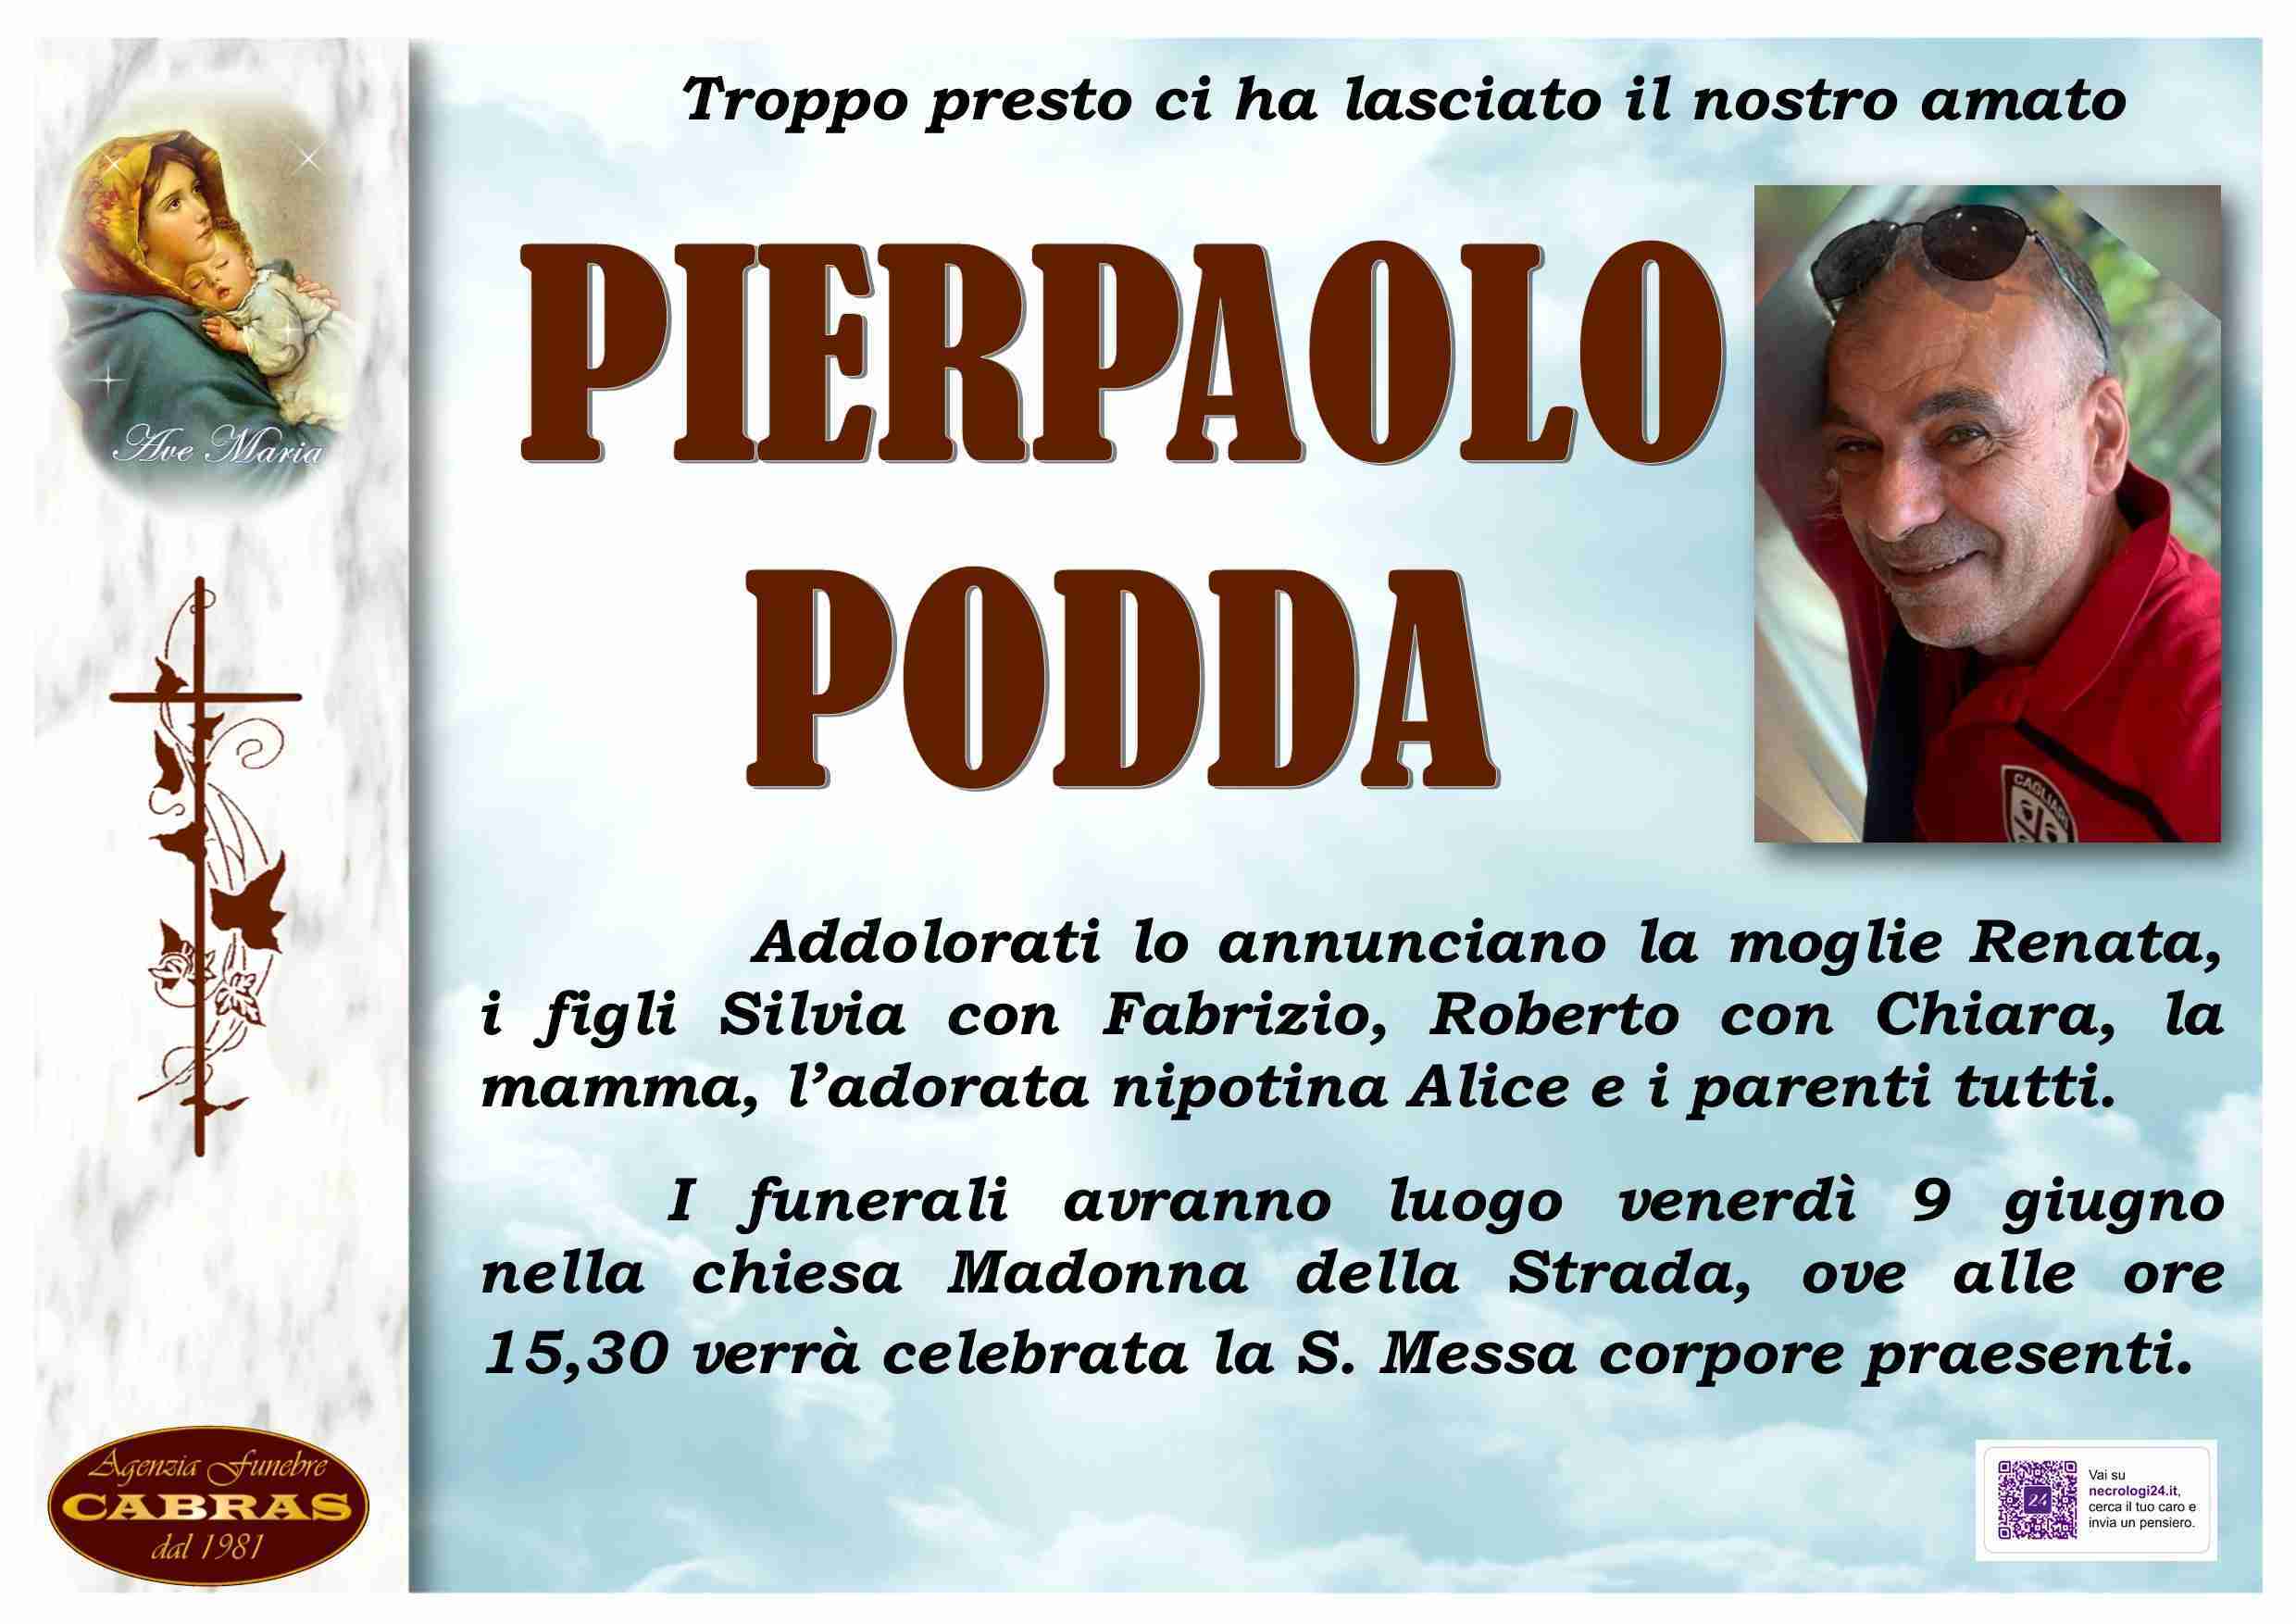 Pierpaolo Podda